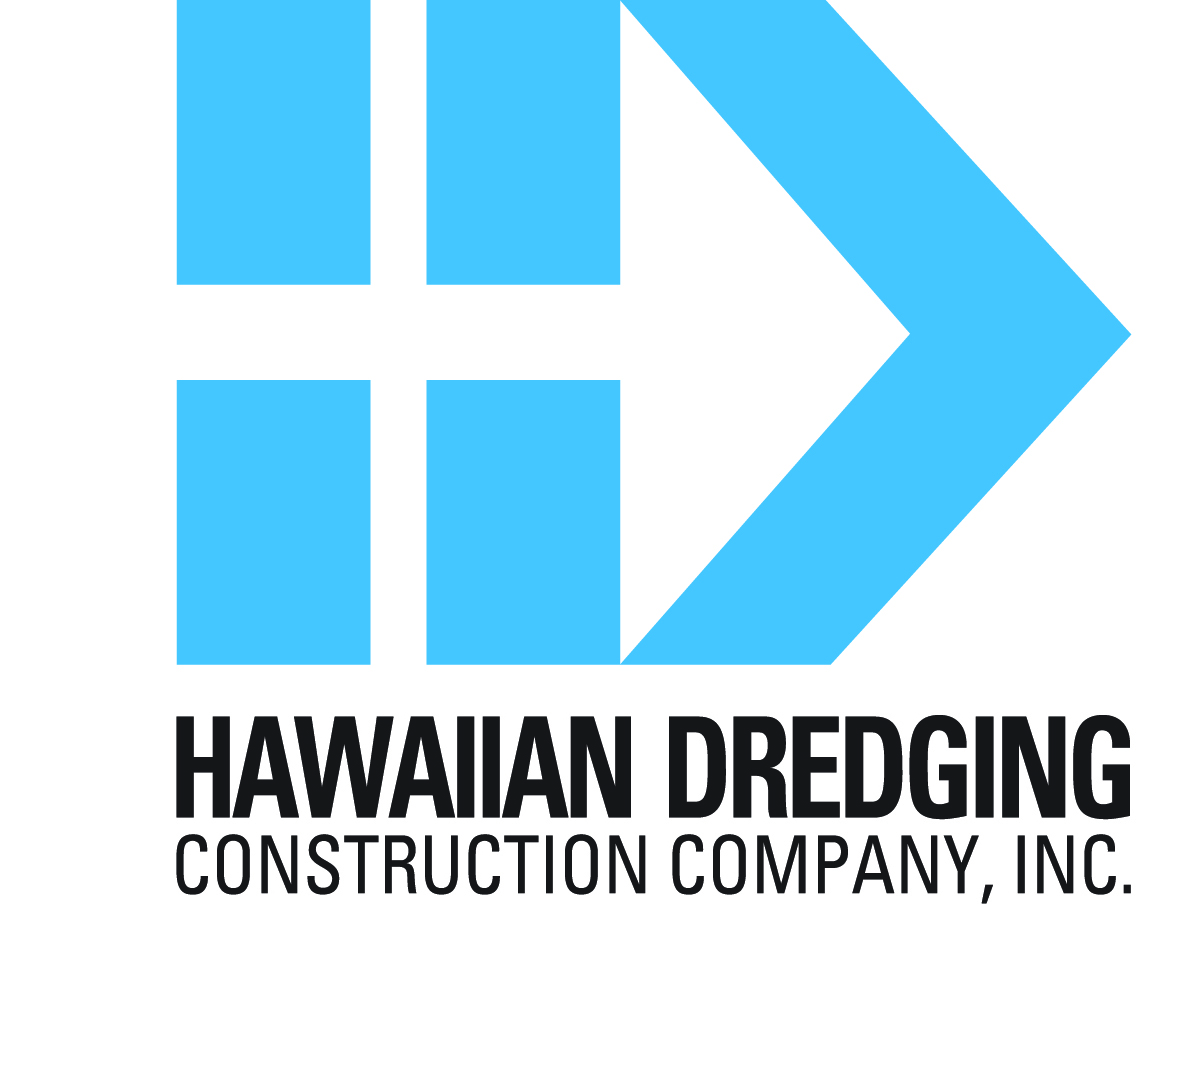 Hawaiian Dredging Construction Company, Inc.